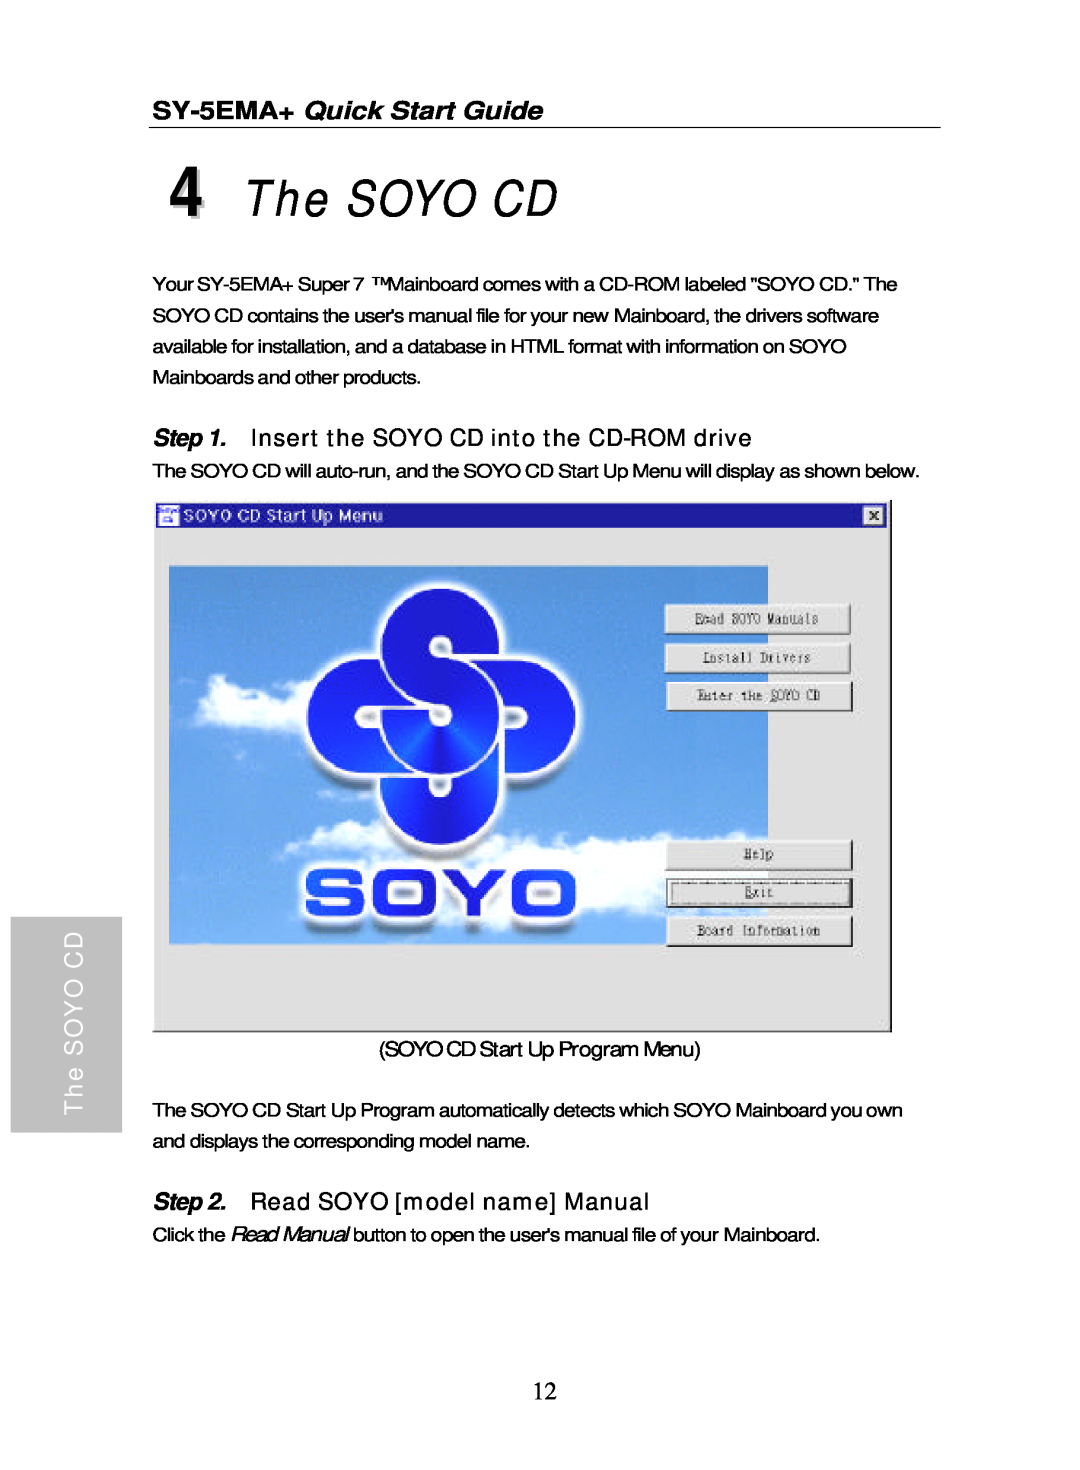 SOYO SY-5EMA+ quick start The SOYO CD, Insert the SOYO CD into the CD-ROM drive, Read SOYO model name Manual 